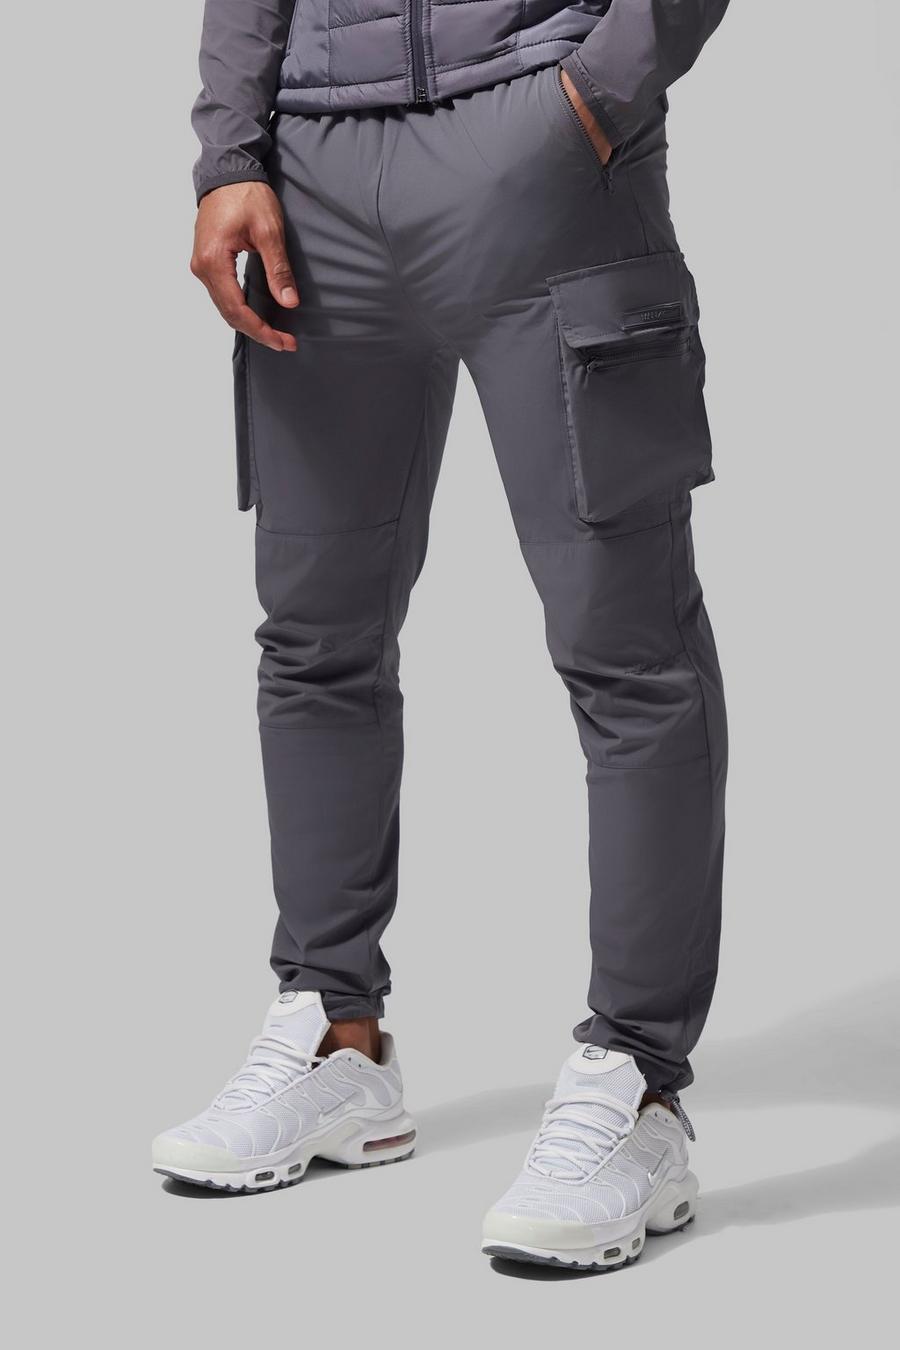 Pantaloni tuta Cargo leggeri Man Active, Charcoal grigio